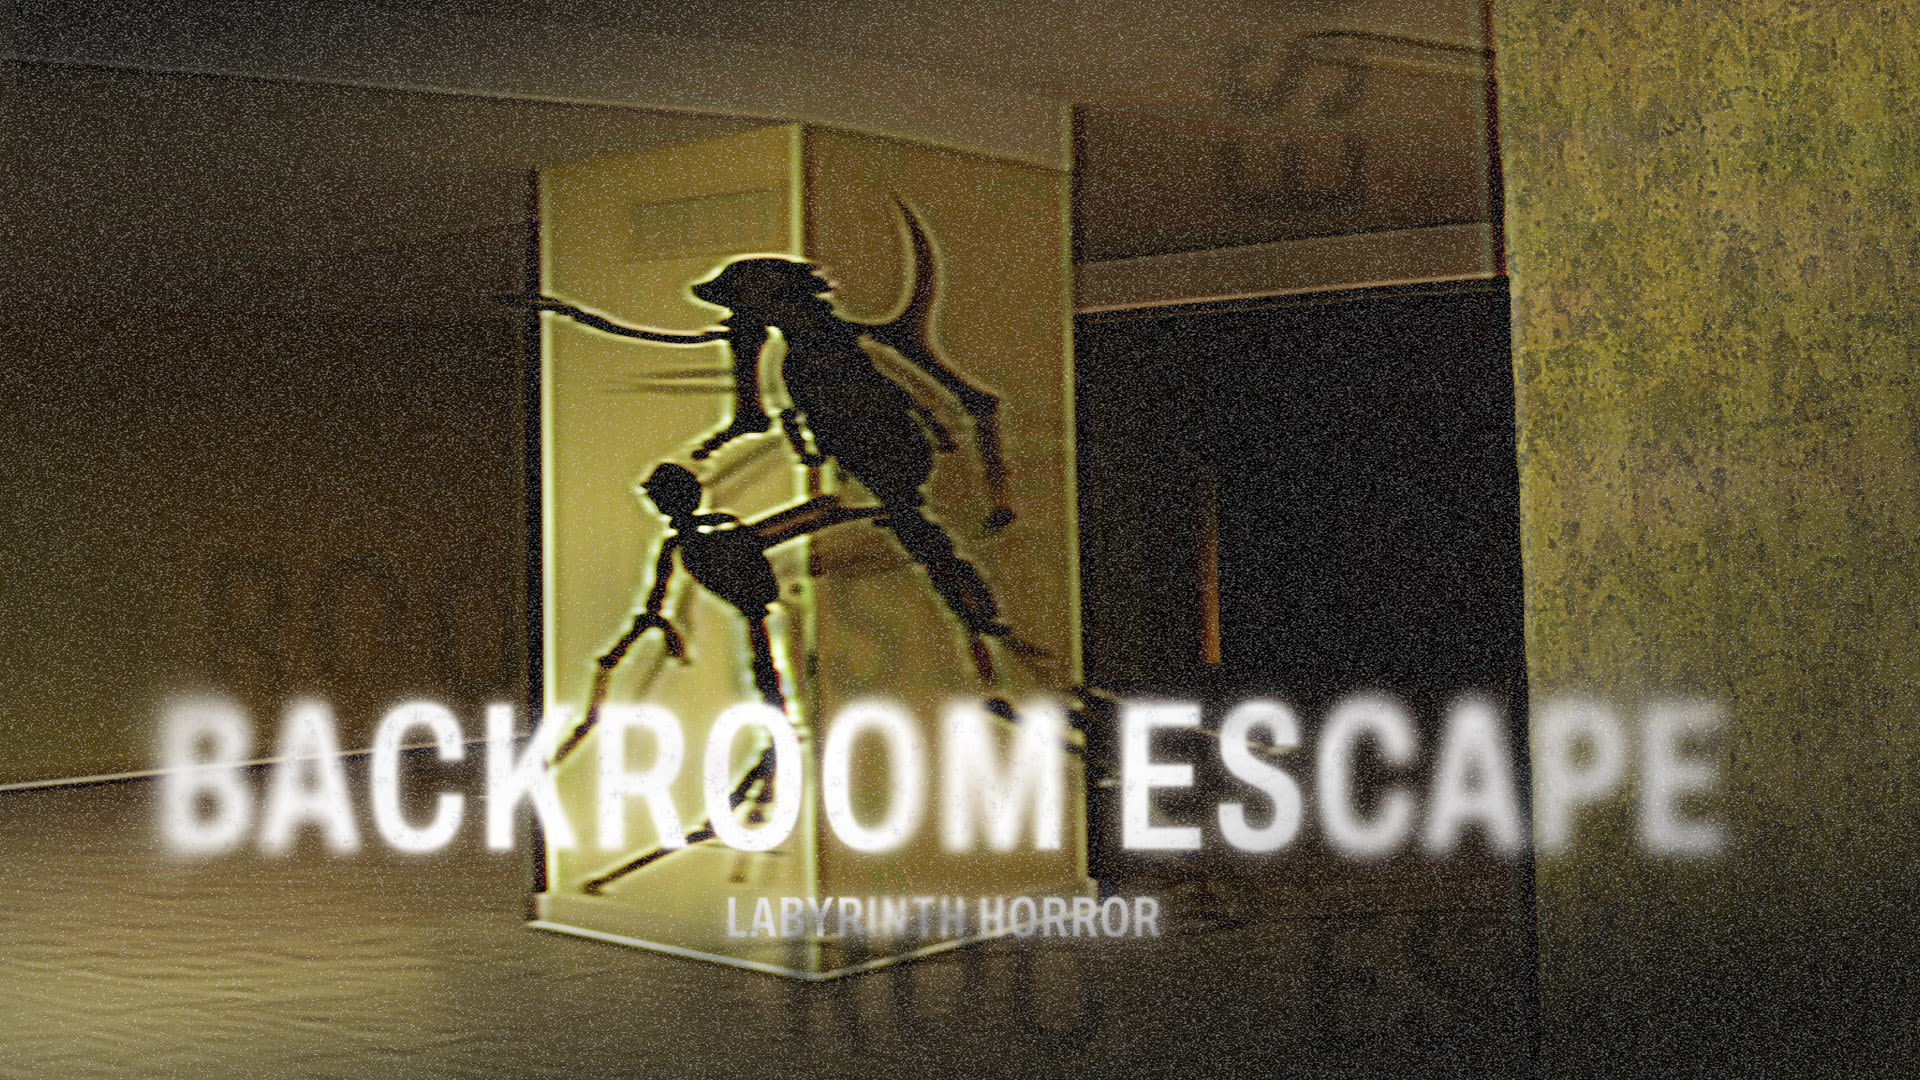 Backroom Escape: Labyrinth Horror